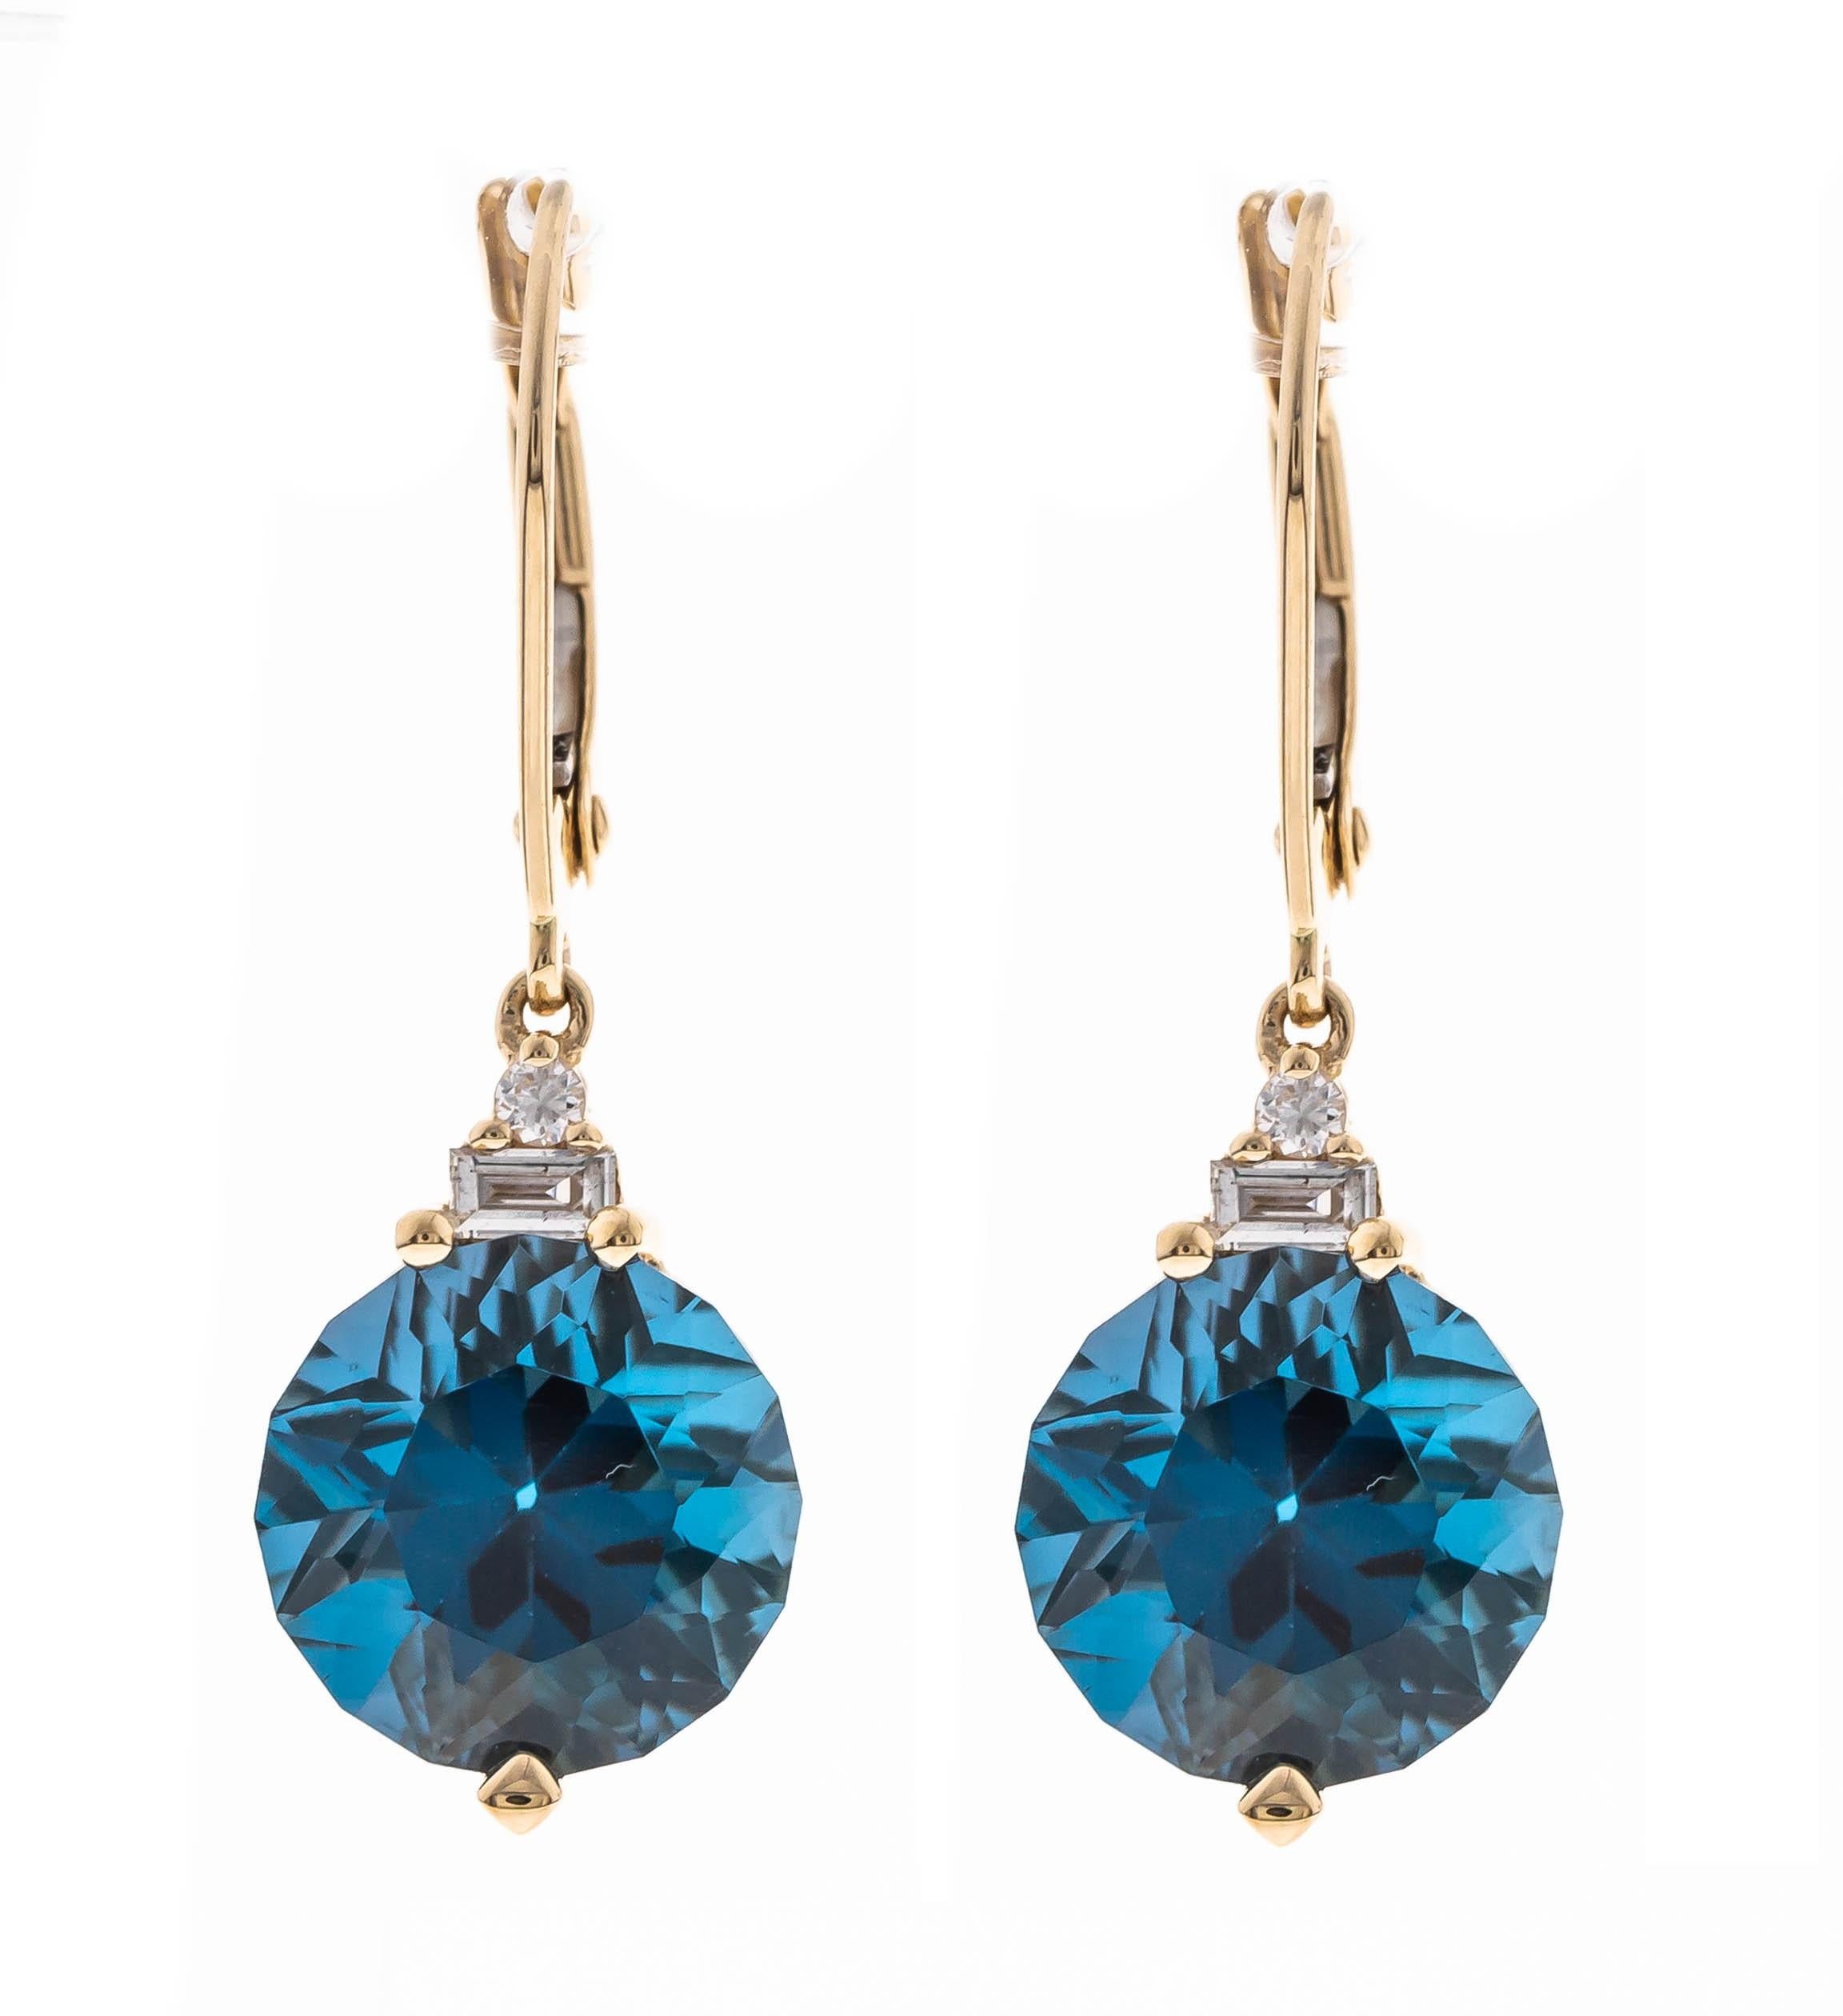 Brilliant Cut 6.27 Carat Fancy-Cut London Blue Topaz Diamond Accents 14K Yellow Gold Earring For Sale